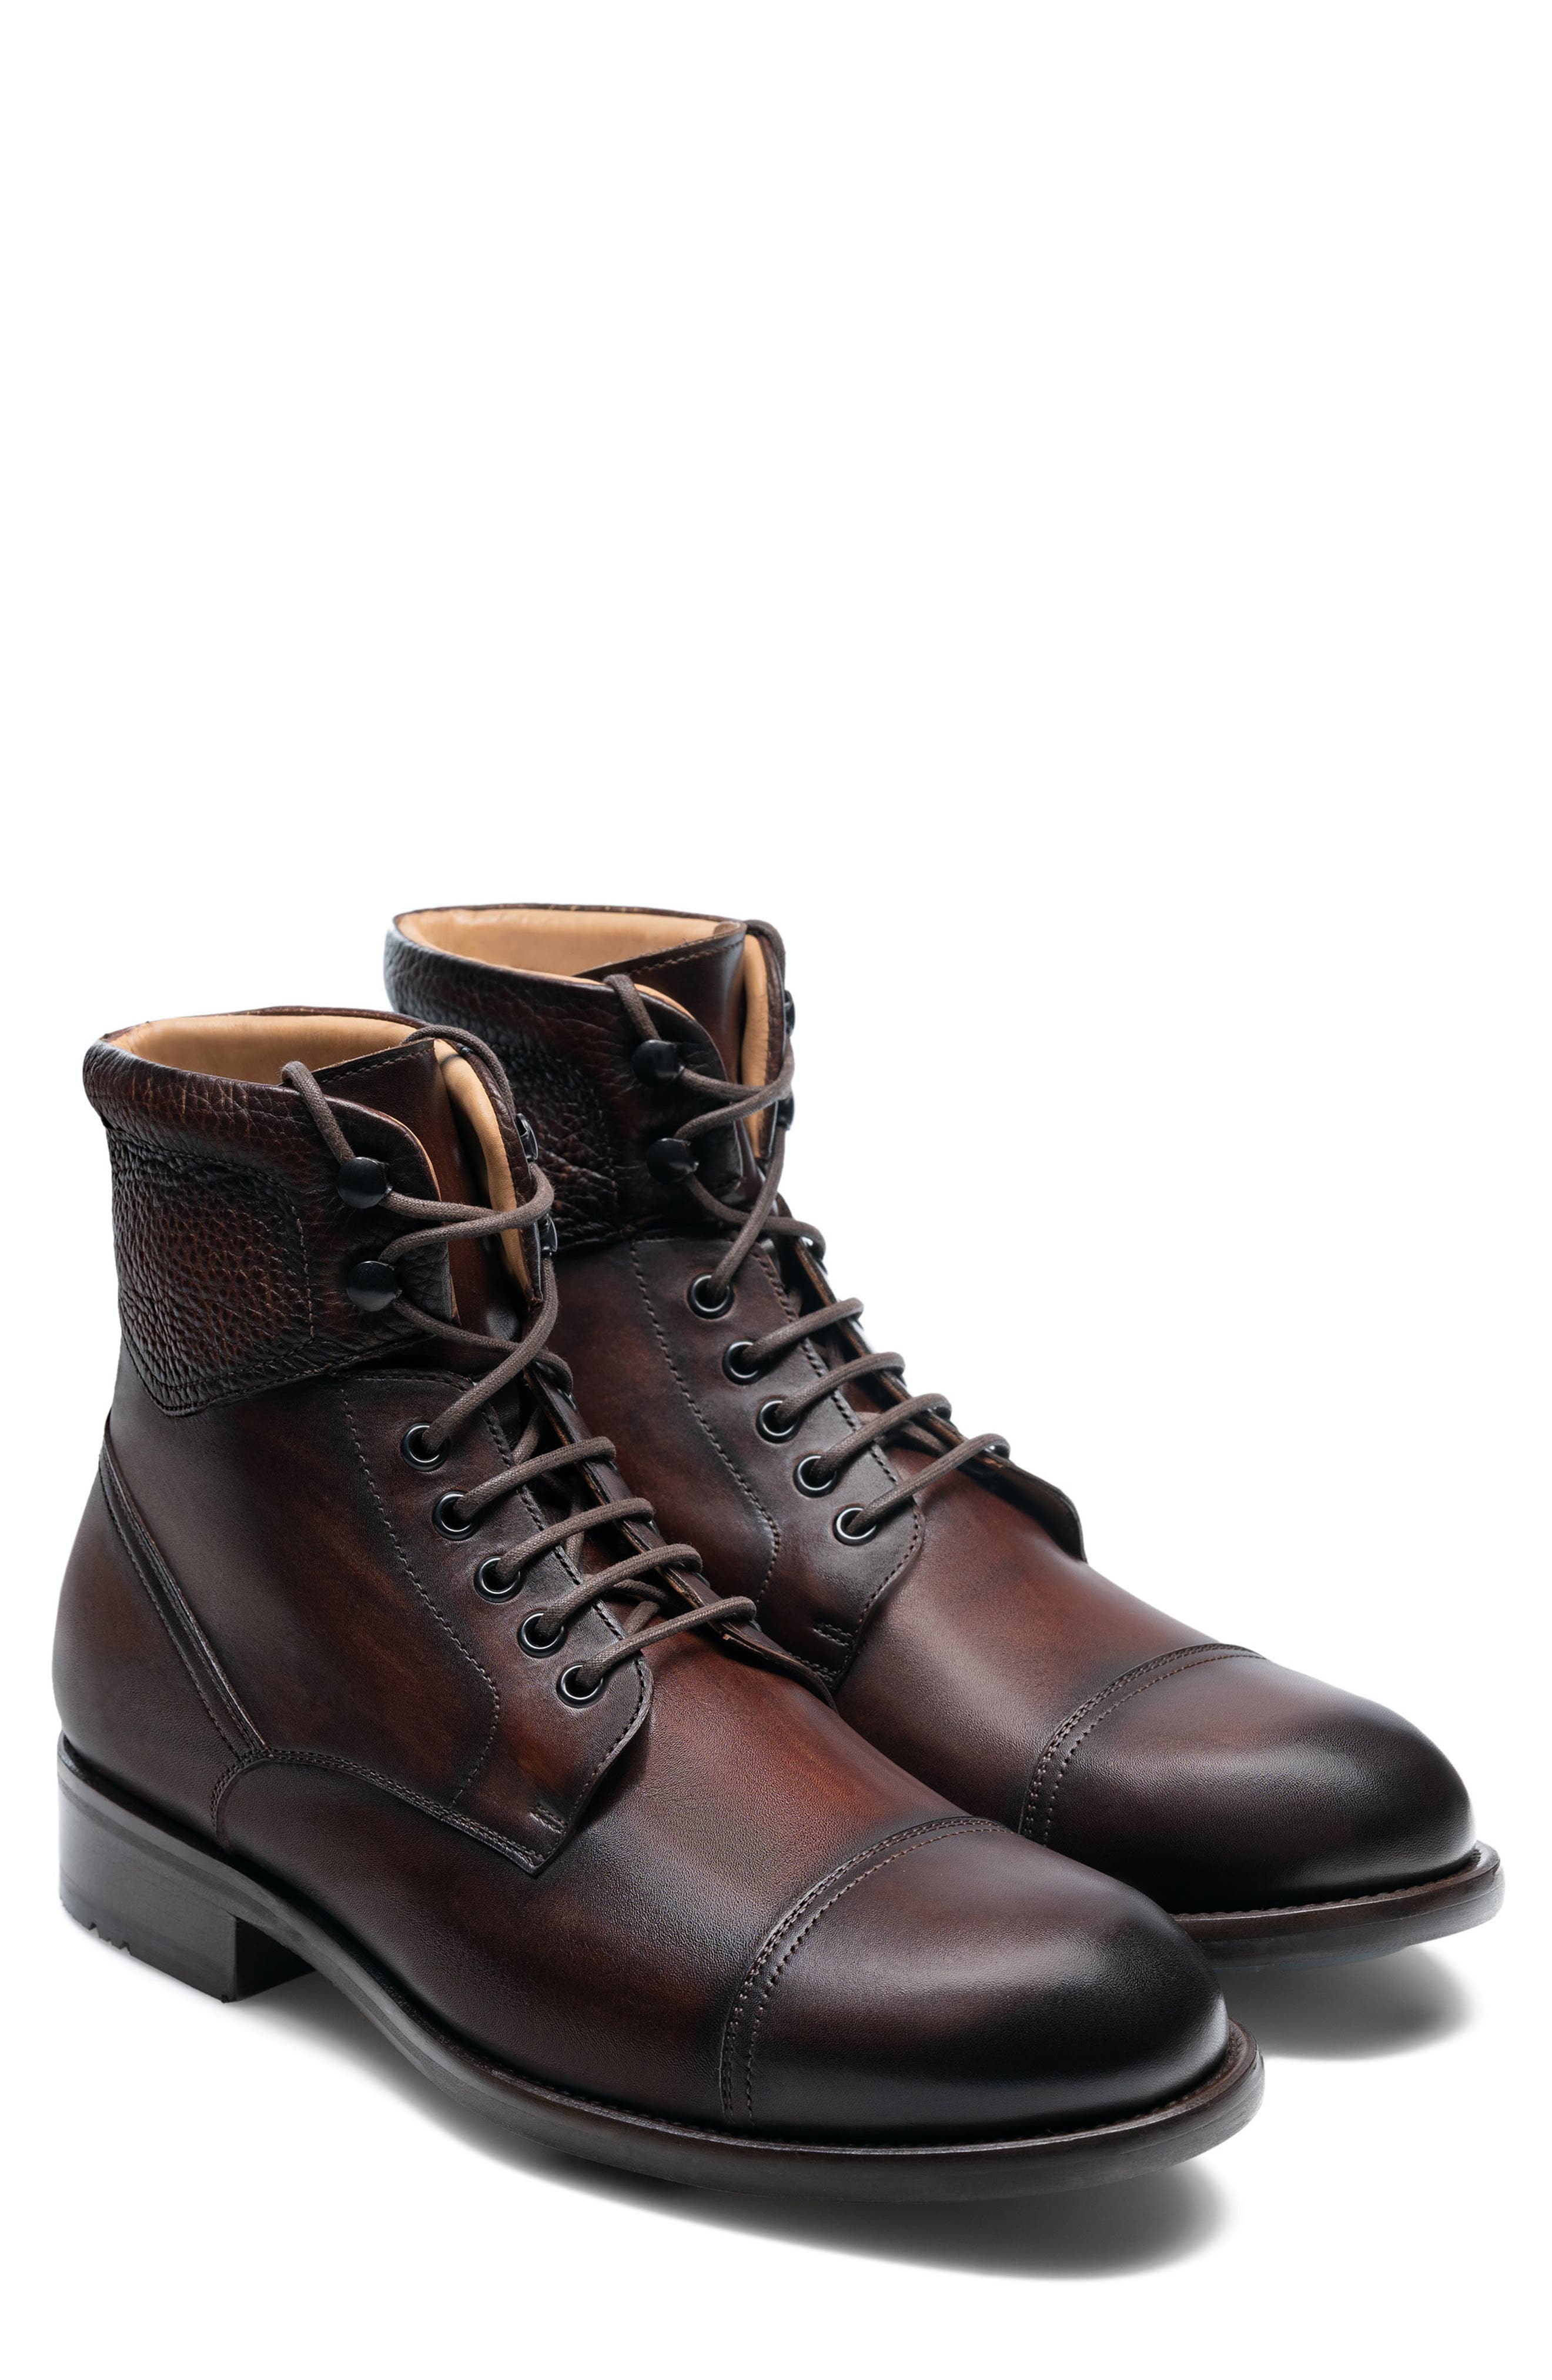 magnanni men's boots